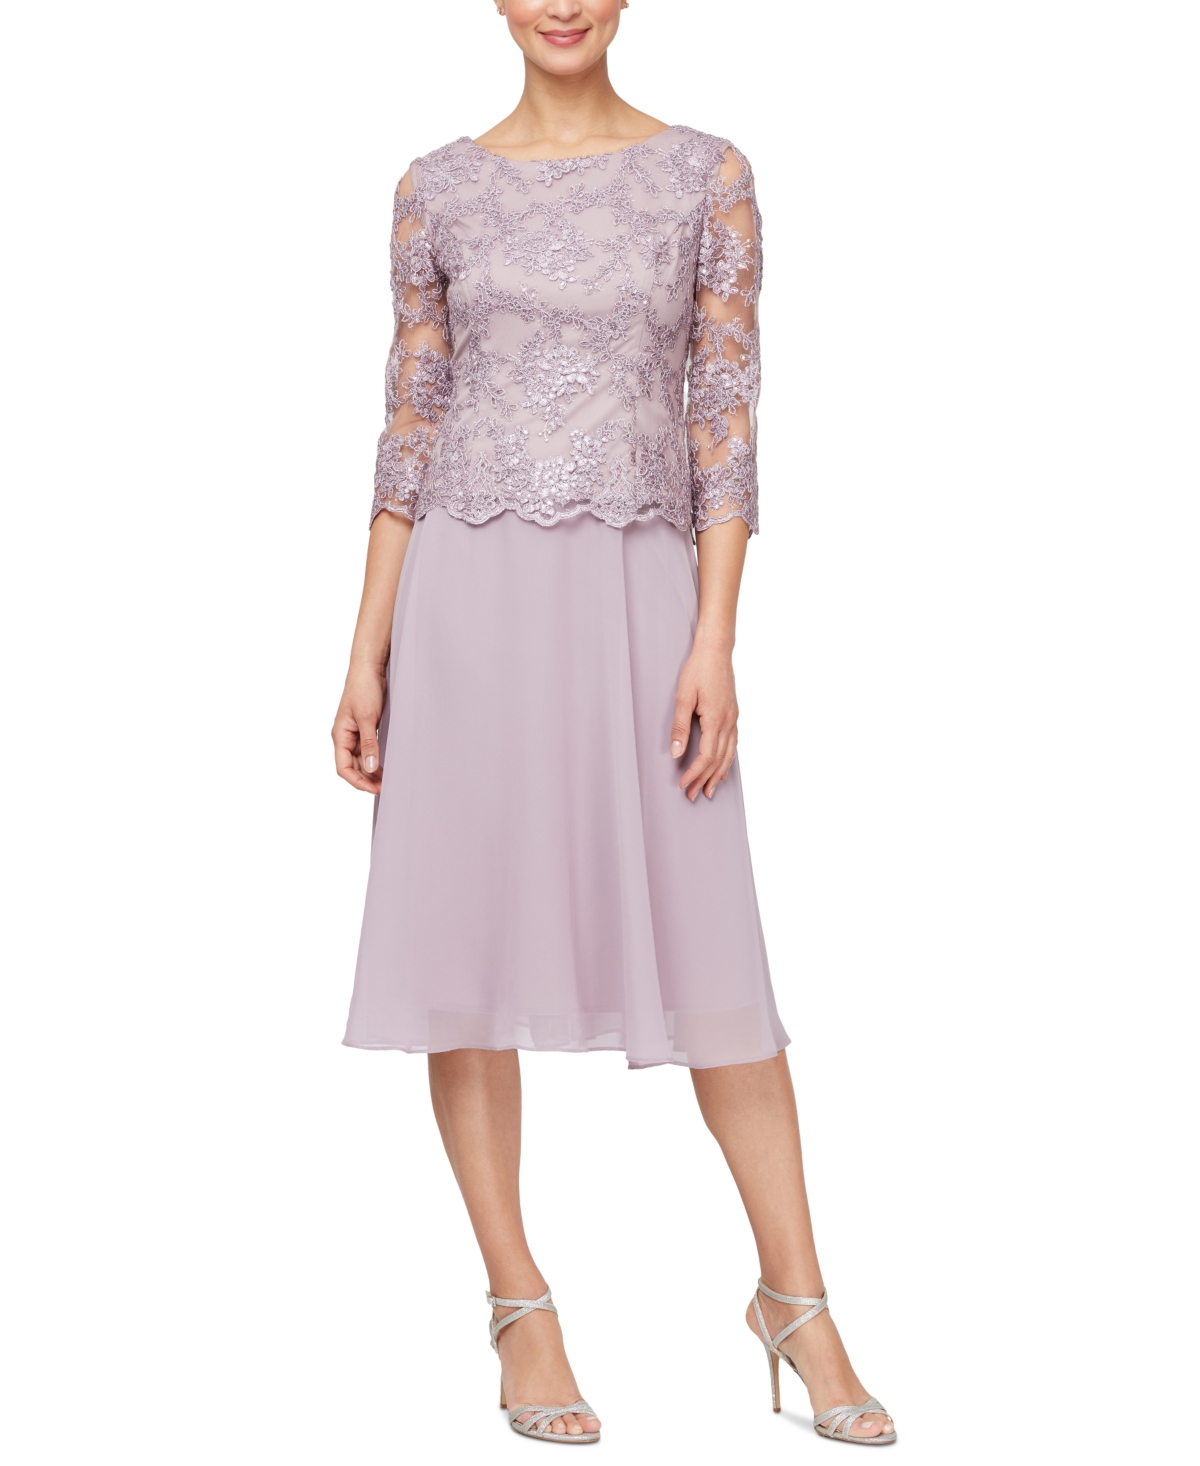 Women's Layered Embellished Lace-Bodice Dress - Wisteria